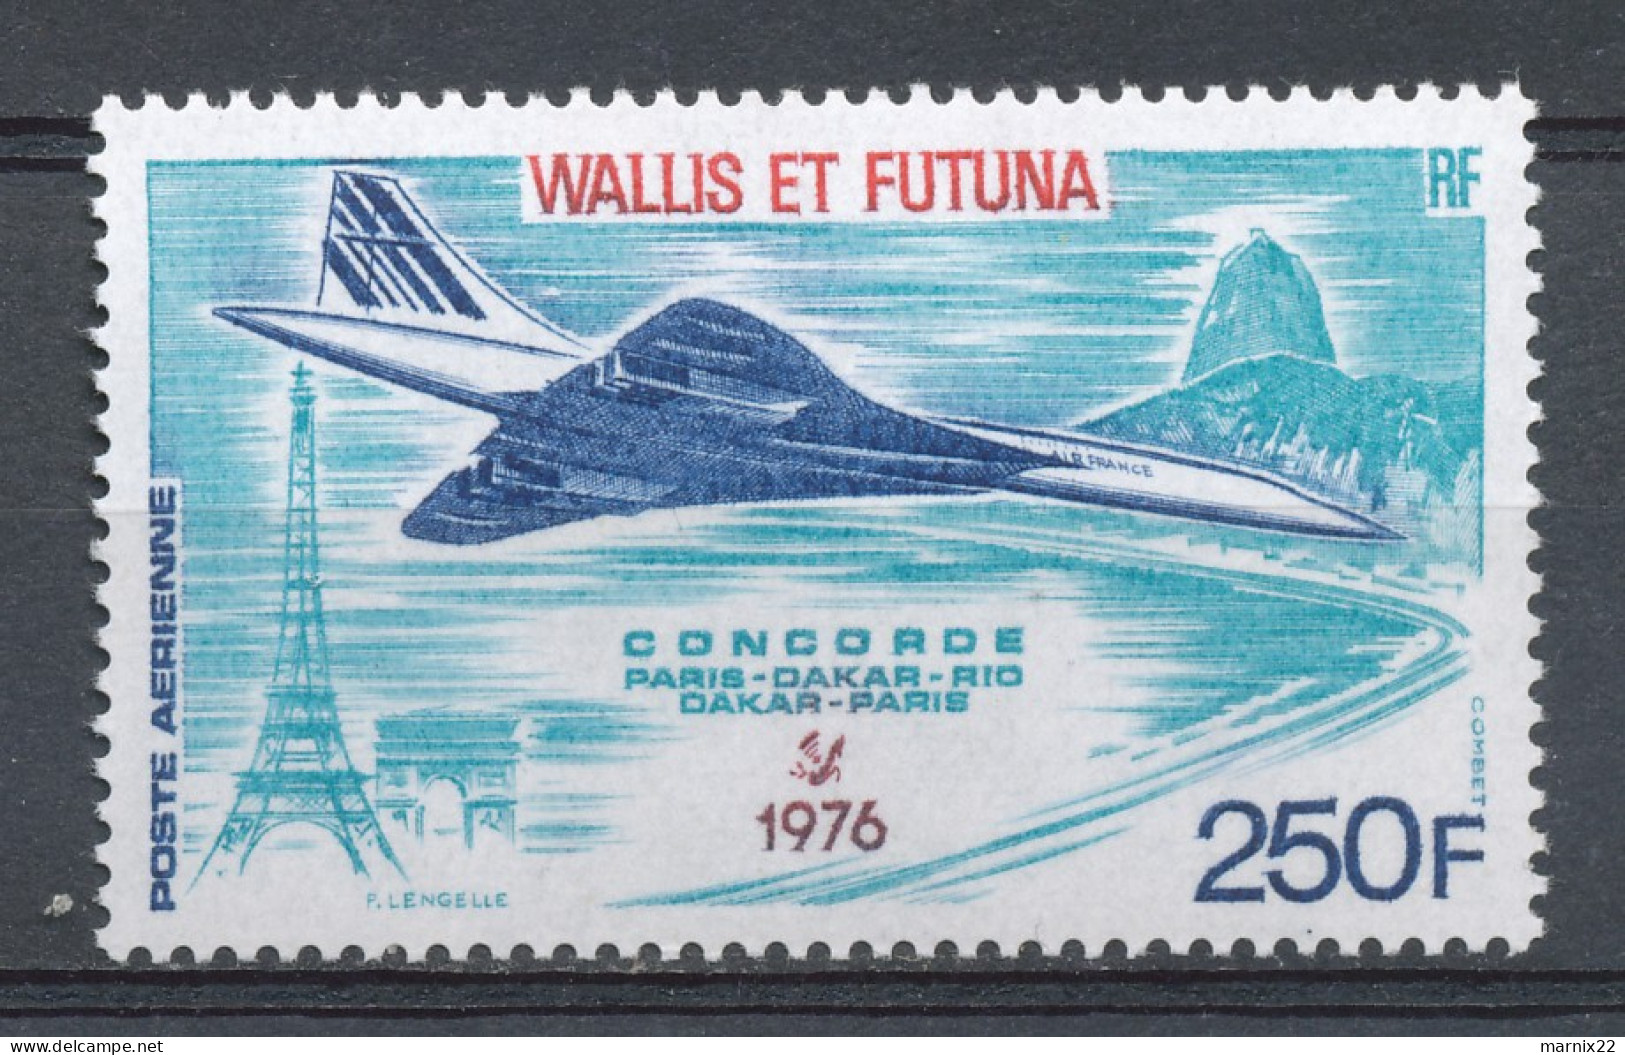 WALLIS ET FUTUNA 1976 - CONCORDE PARIS-DAKAR-RIO DAKAR PARIS                                                       Hk145 - Unused Stamps